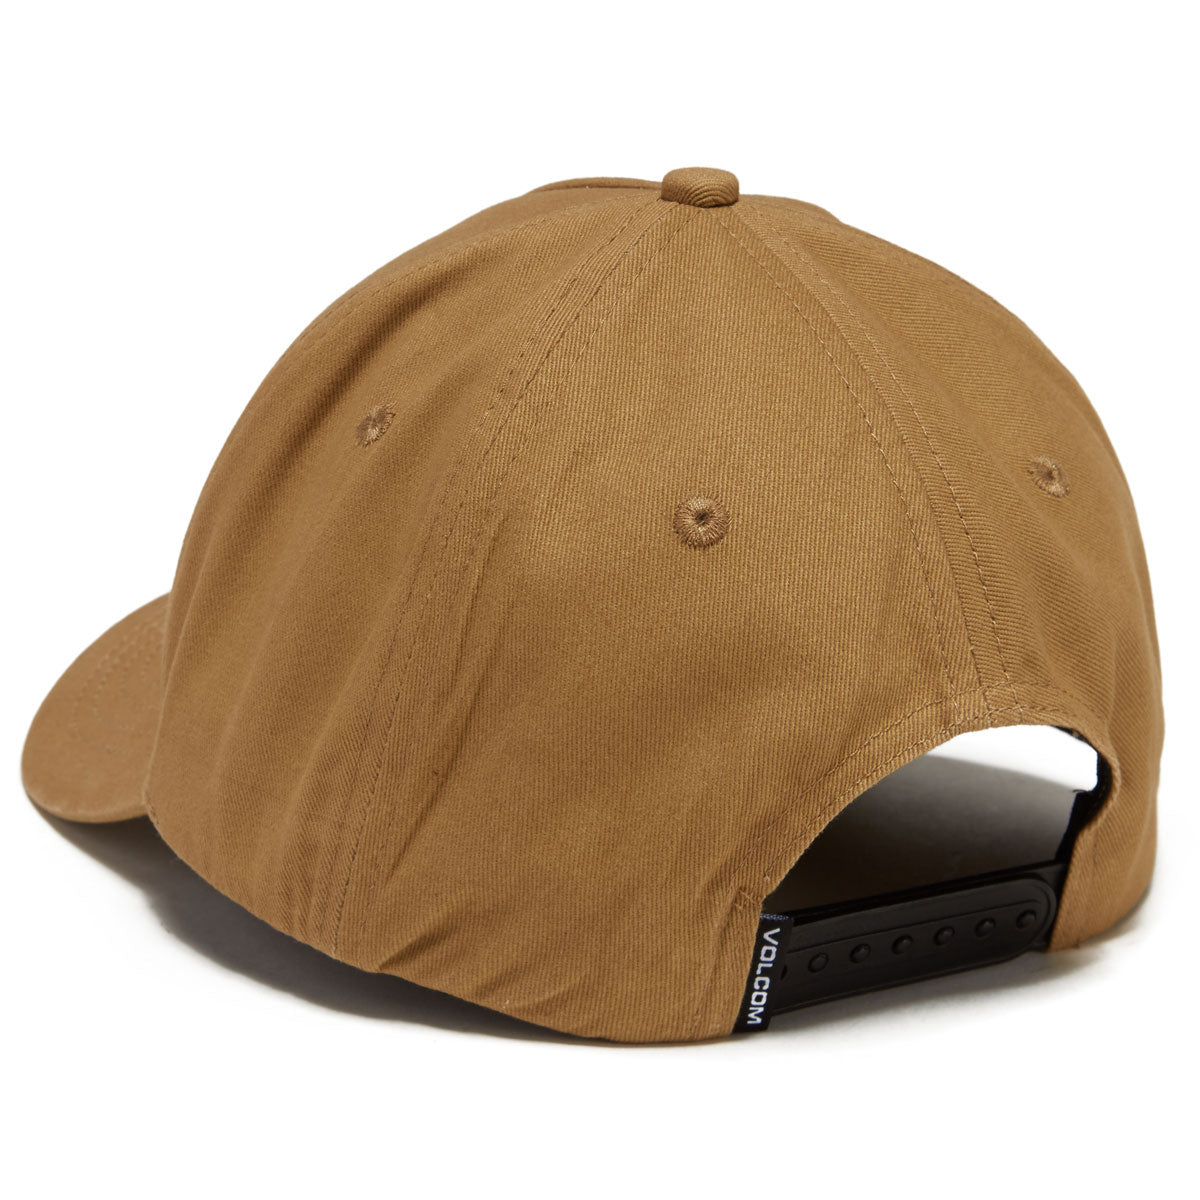 Volcom Embossed Stone Adjustable Hat - Dark Khaki image 2